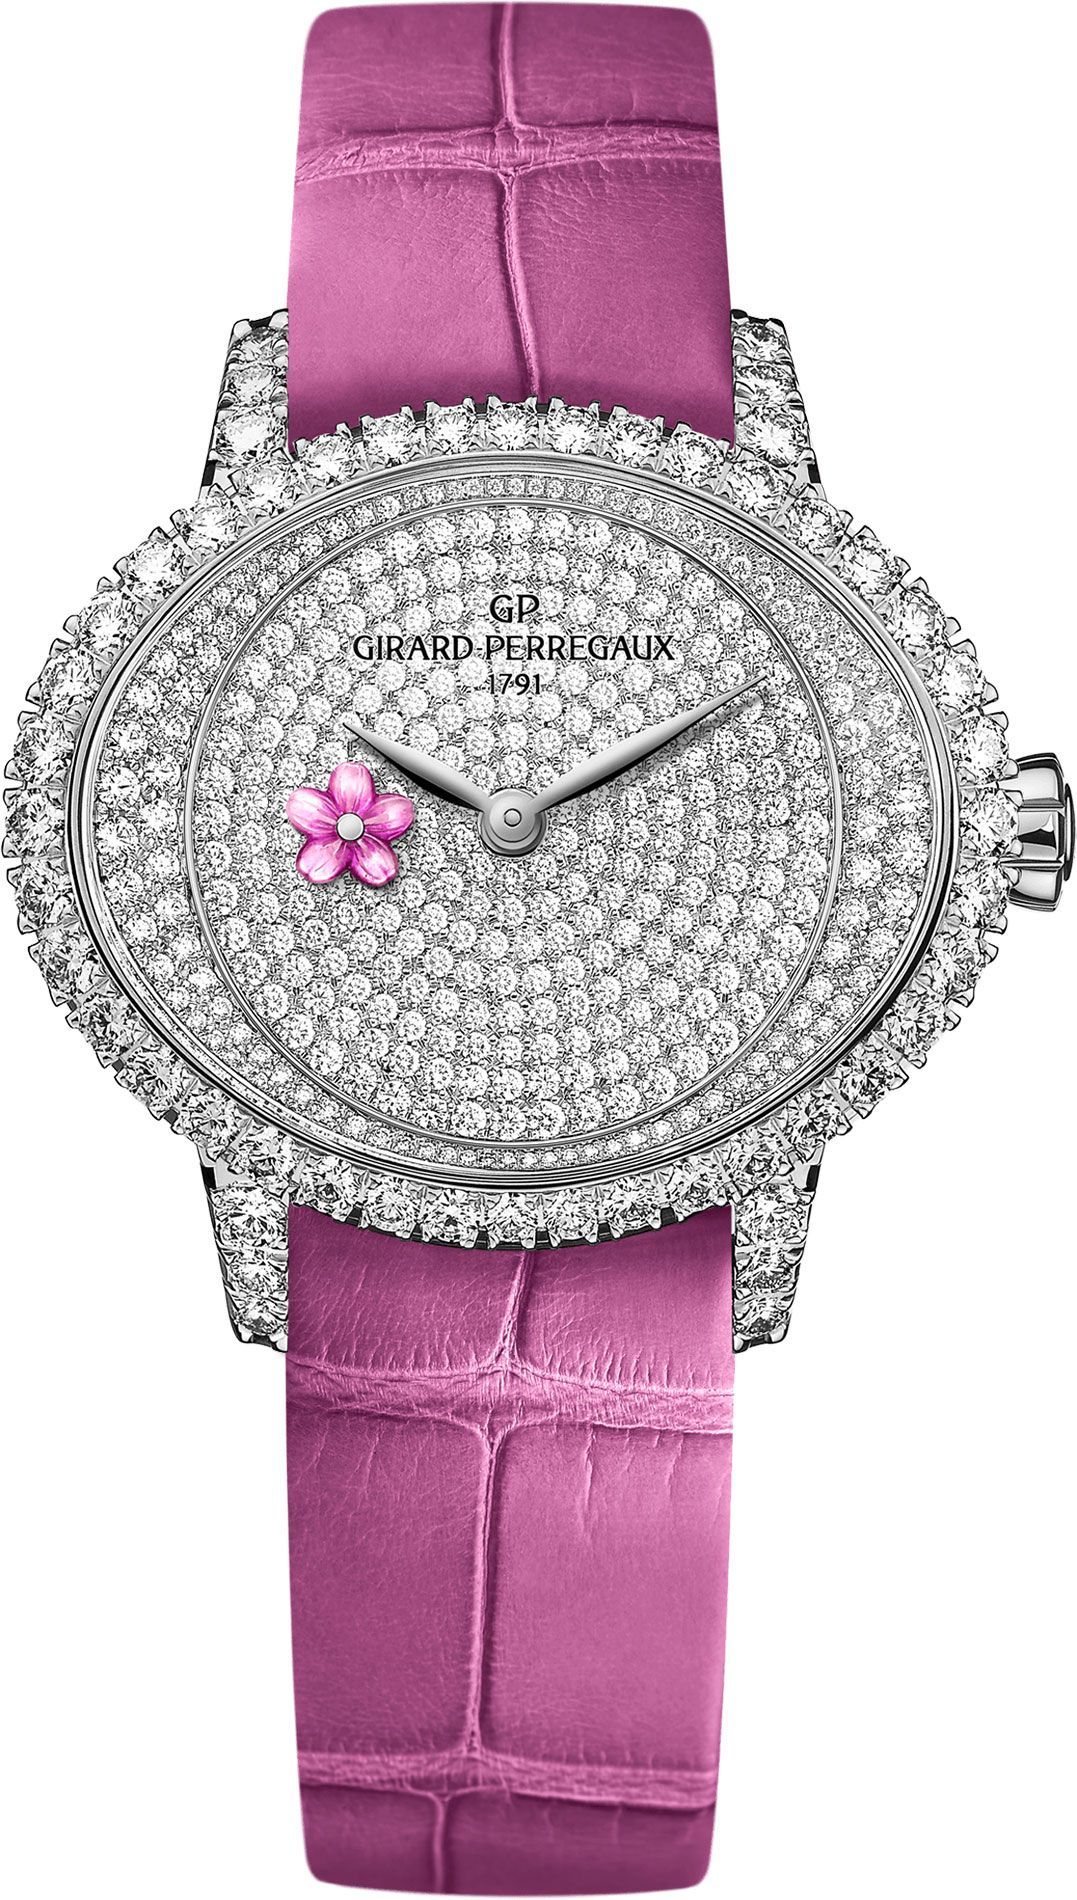 Girard-Perregaux High Jewellery 30.75 mm Watch in Diamond pavé Dial For Women - 1